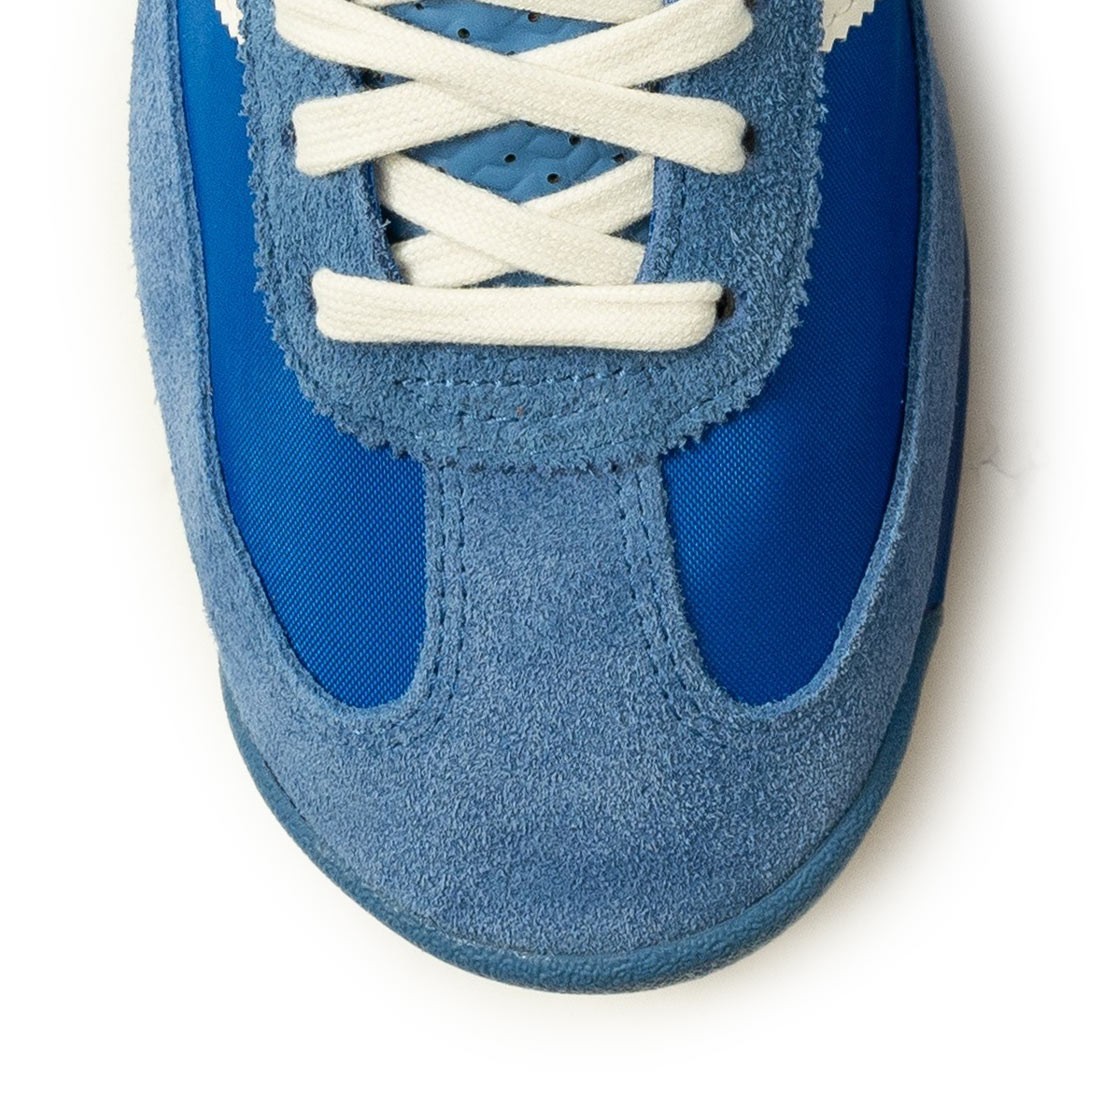 Adidas Men Sl 72 Rs blue white